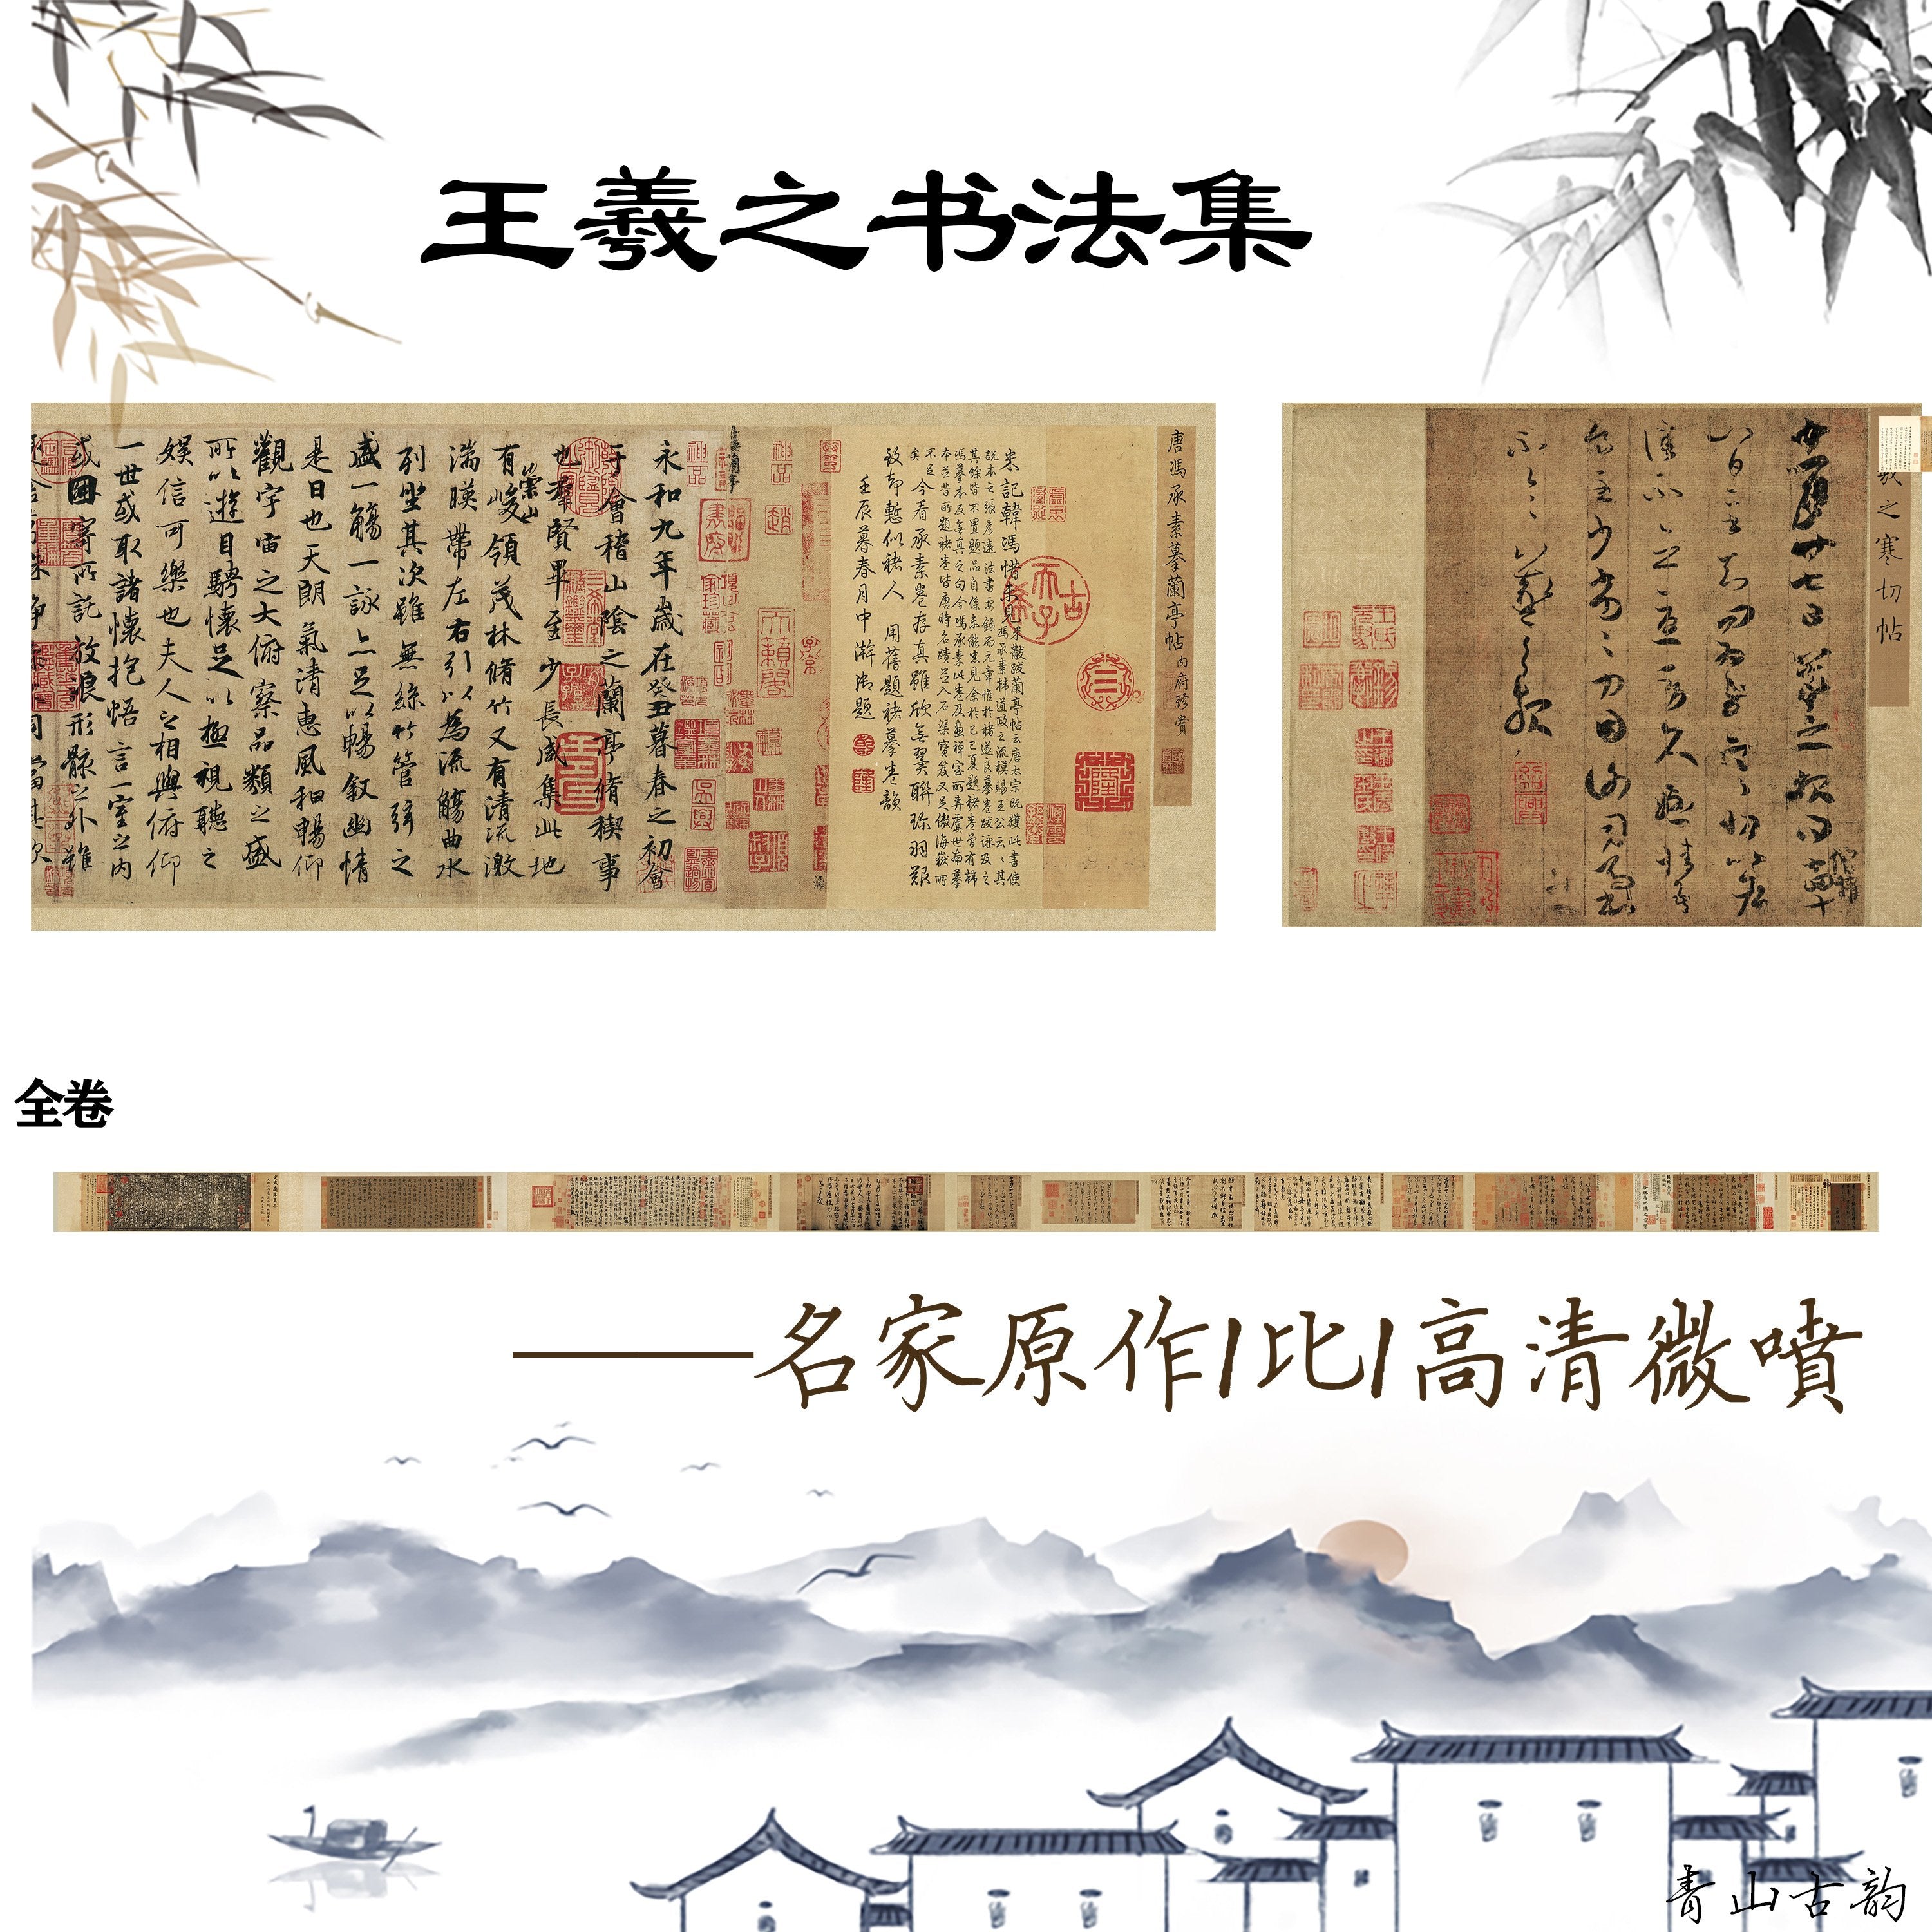 Chinese Antique Art Painting Jin Wang Xi Zhi Shu Fa 晋 王羲之 书法全集 兰亭序 通天贴 寒切请示贴